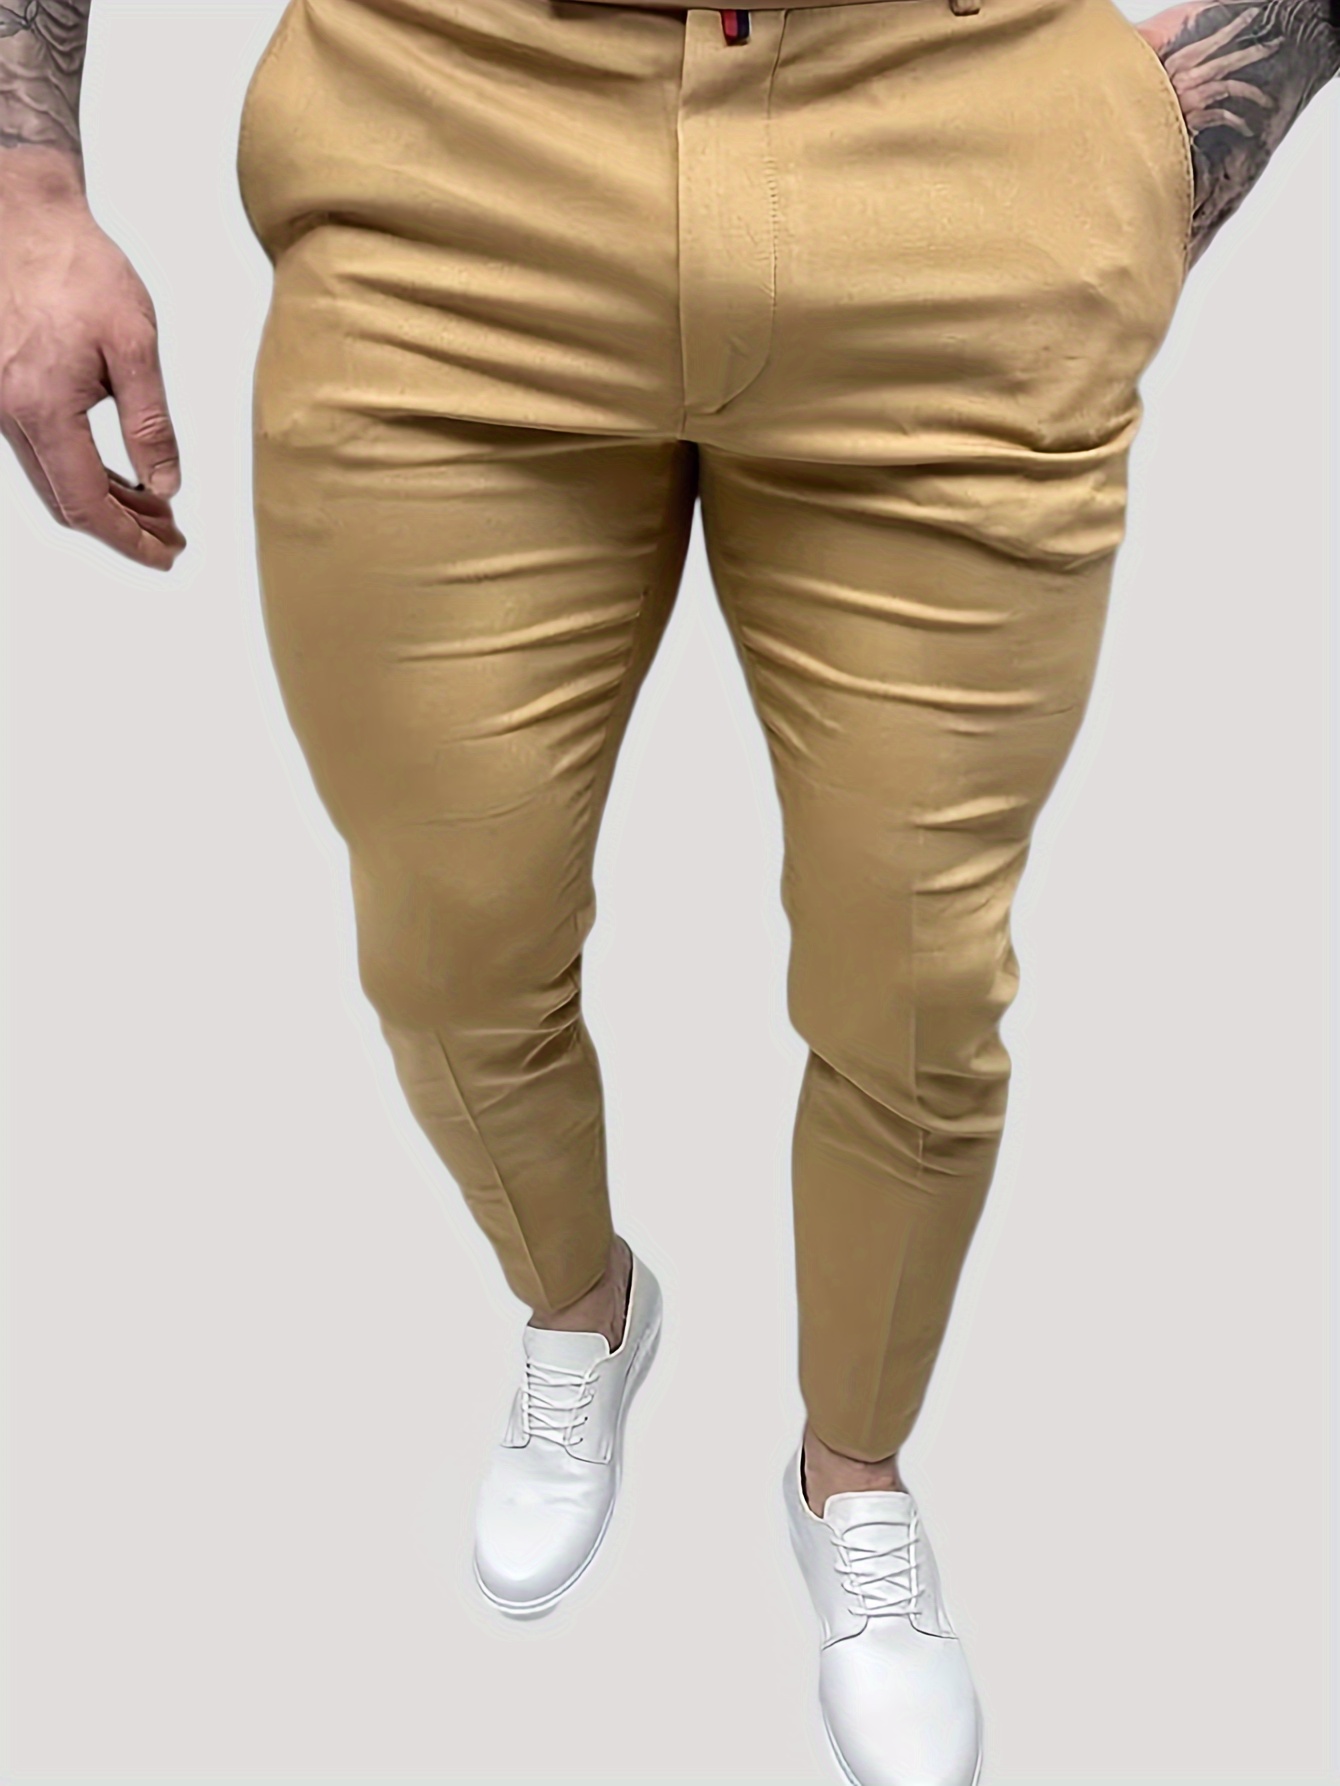 Solid Regular Fit Cotton Blend Women's Casual Pants